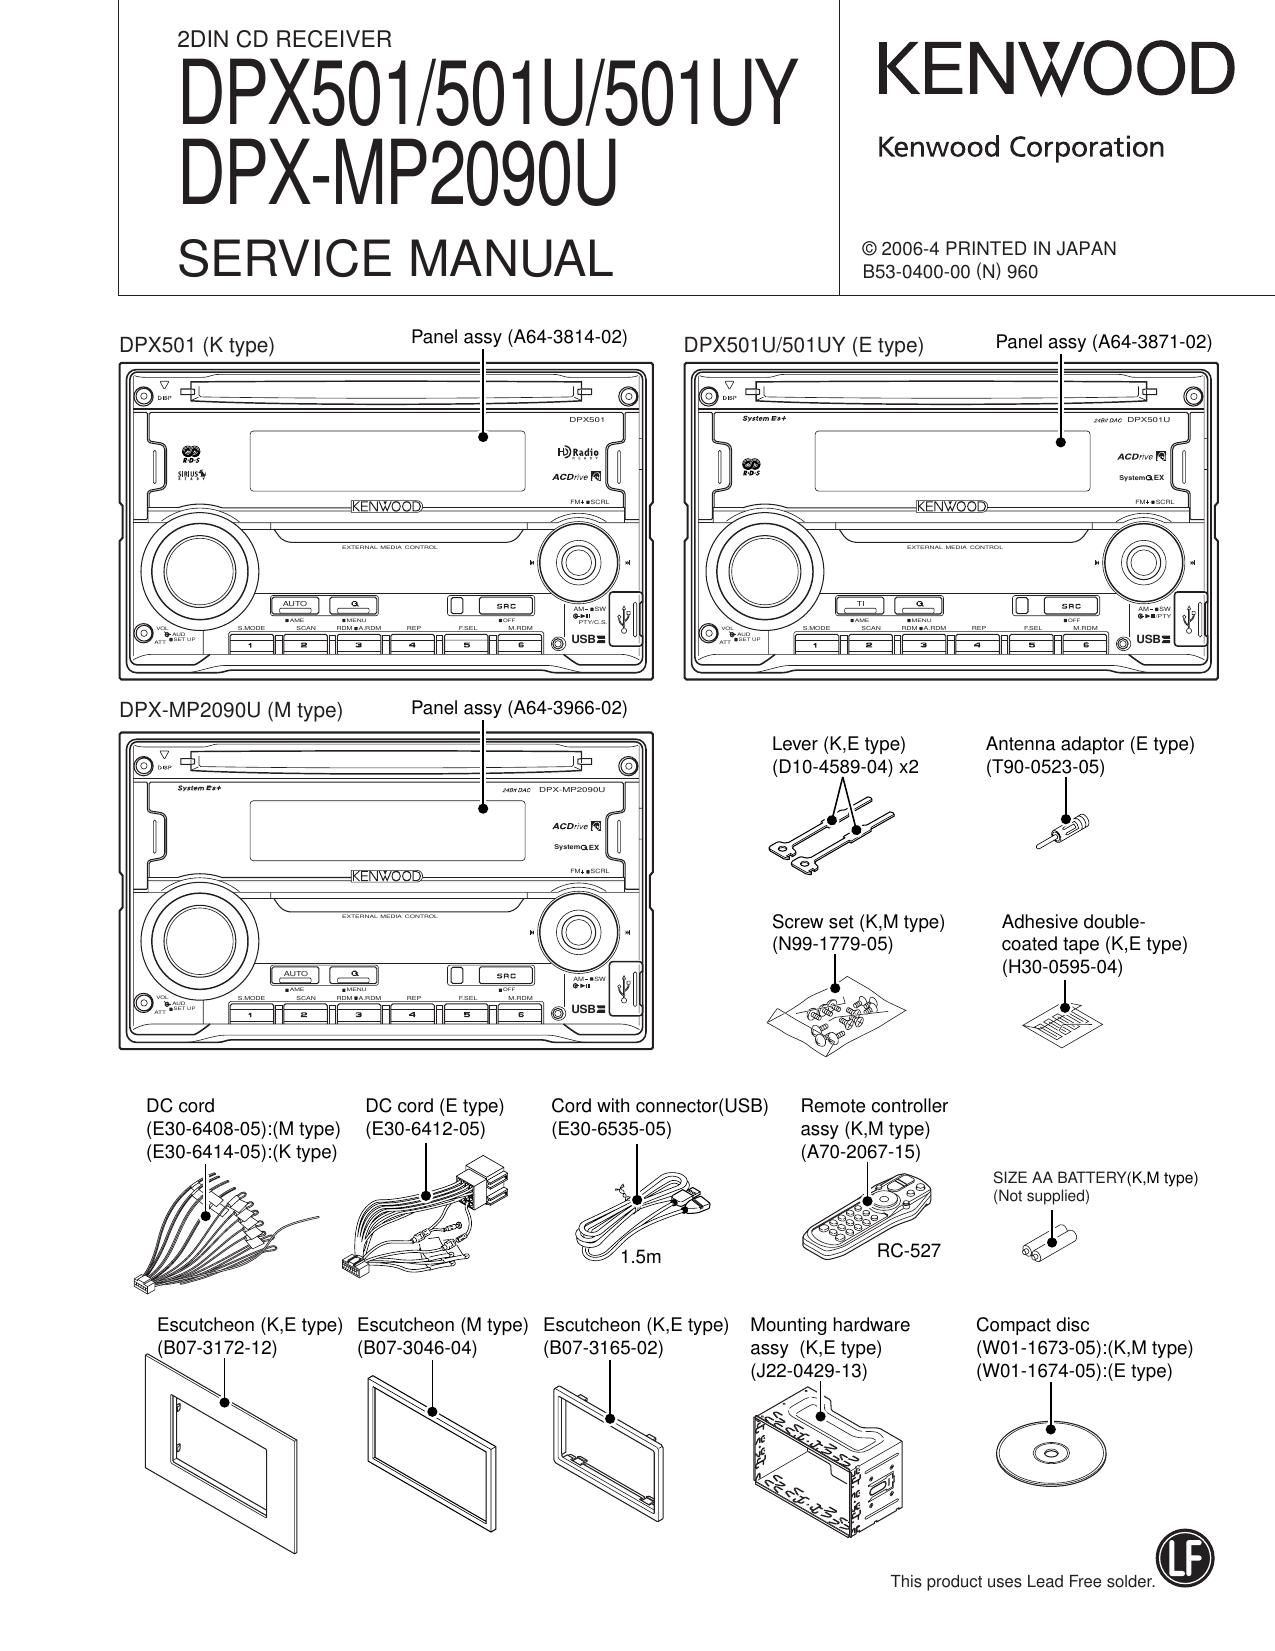 Kenwood DPX 501 U Service Manual